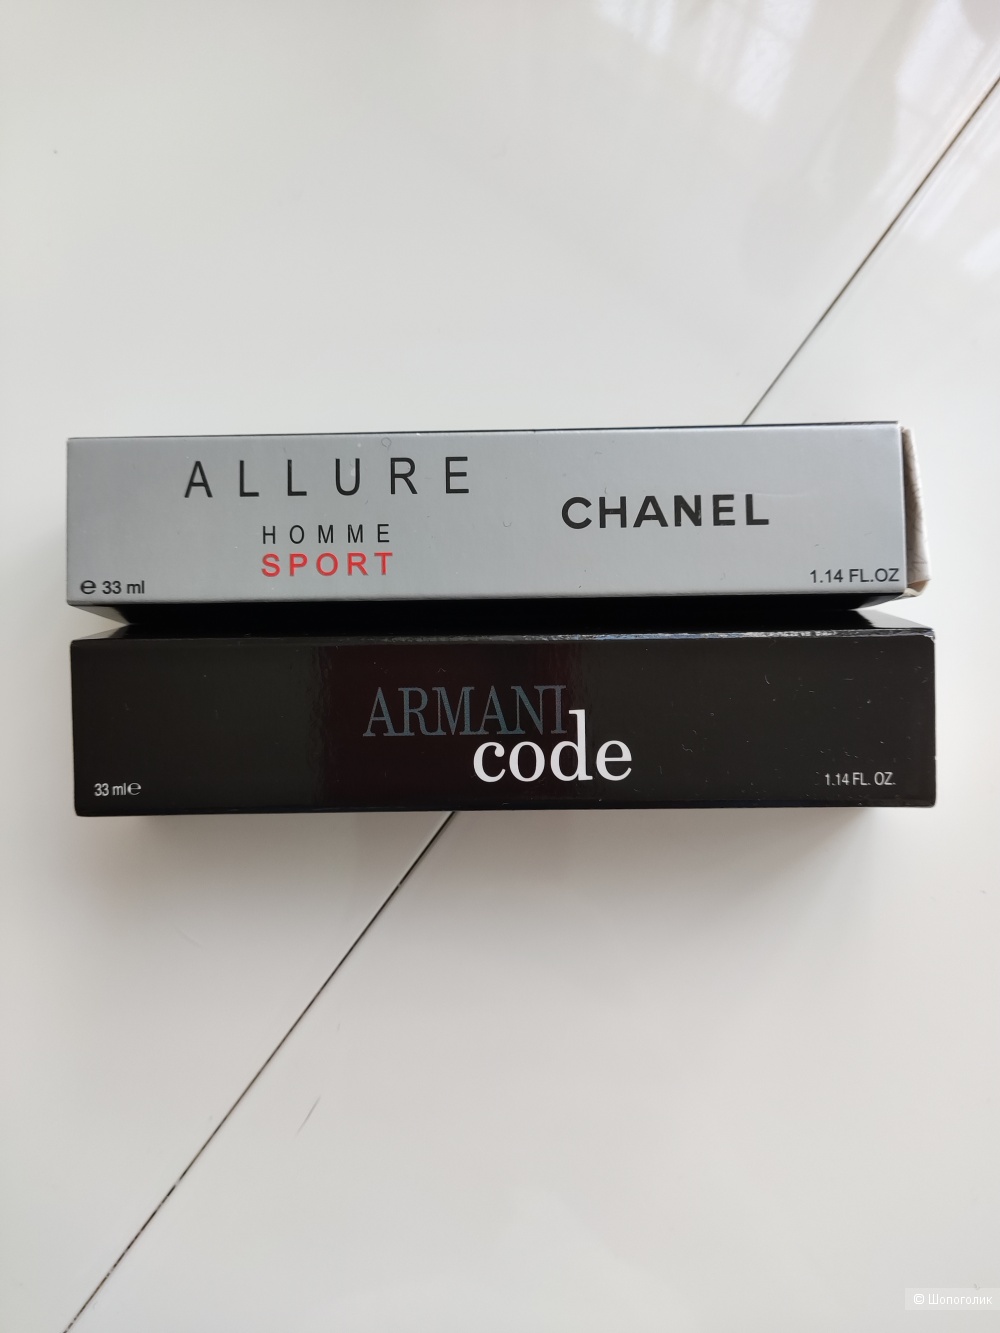 Парфюм Armani code+ Chanel allure 33 ml, 2 шт тестеры